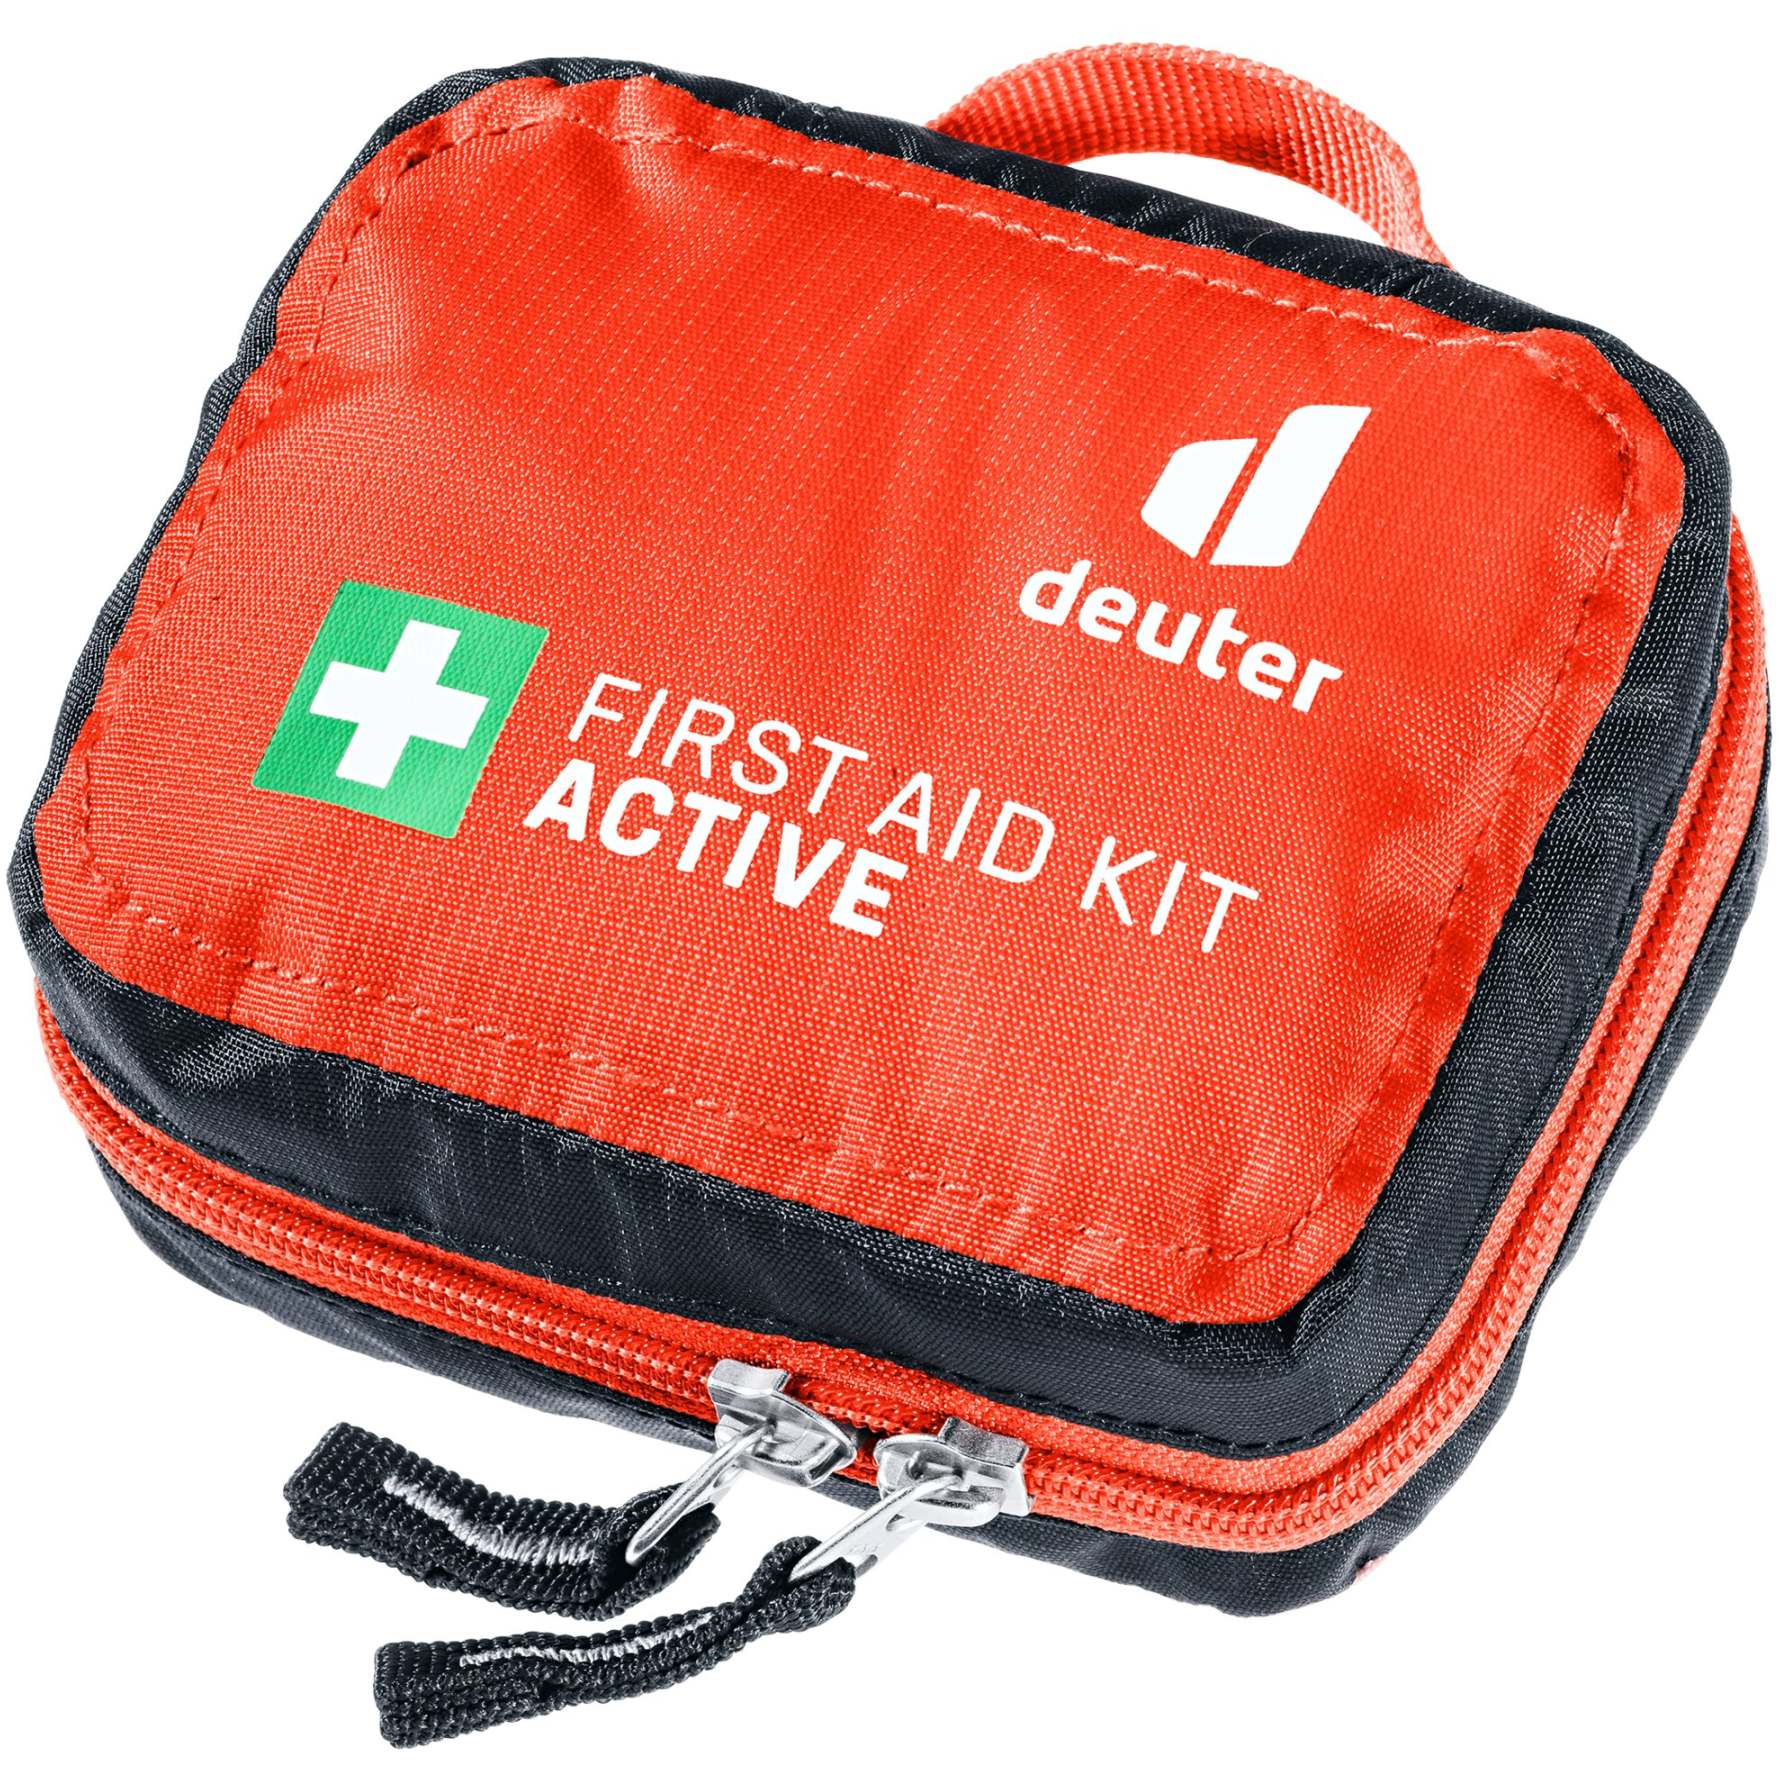 Productfoto van Deuter First Aid Kit Active - recycled fabric / papaya